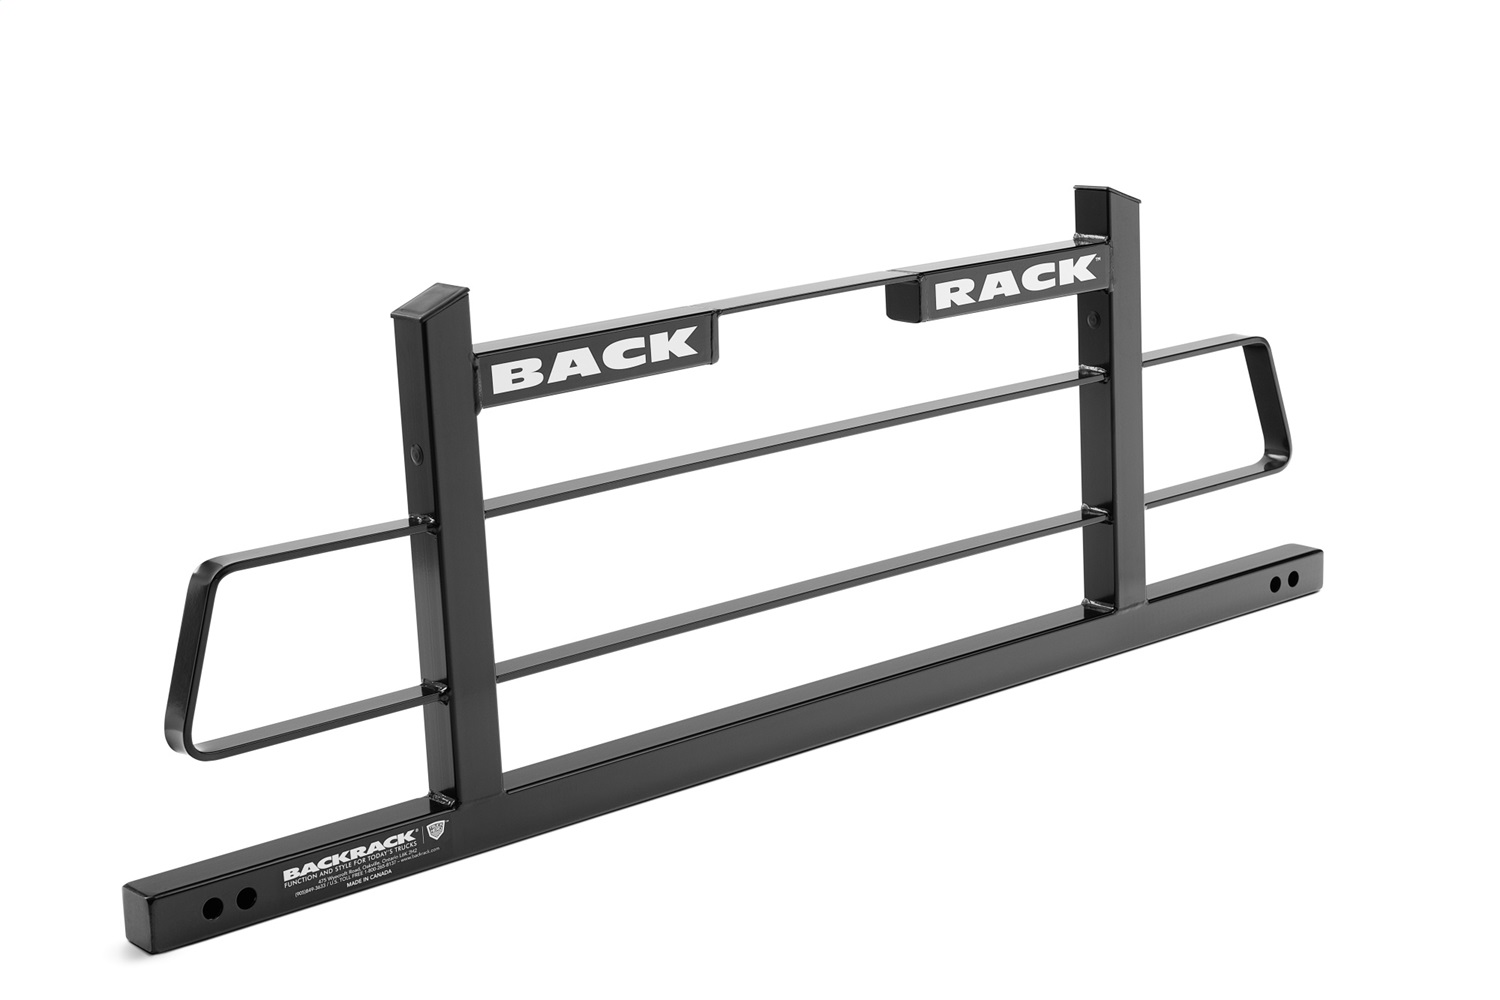 Backrack 15021 Backrack Headache Rack Frame